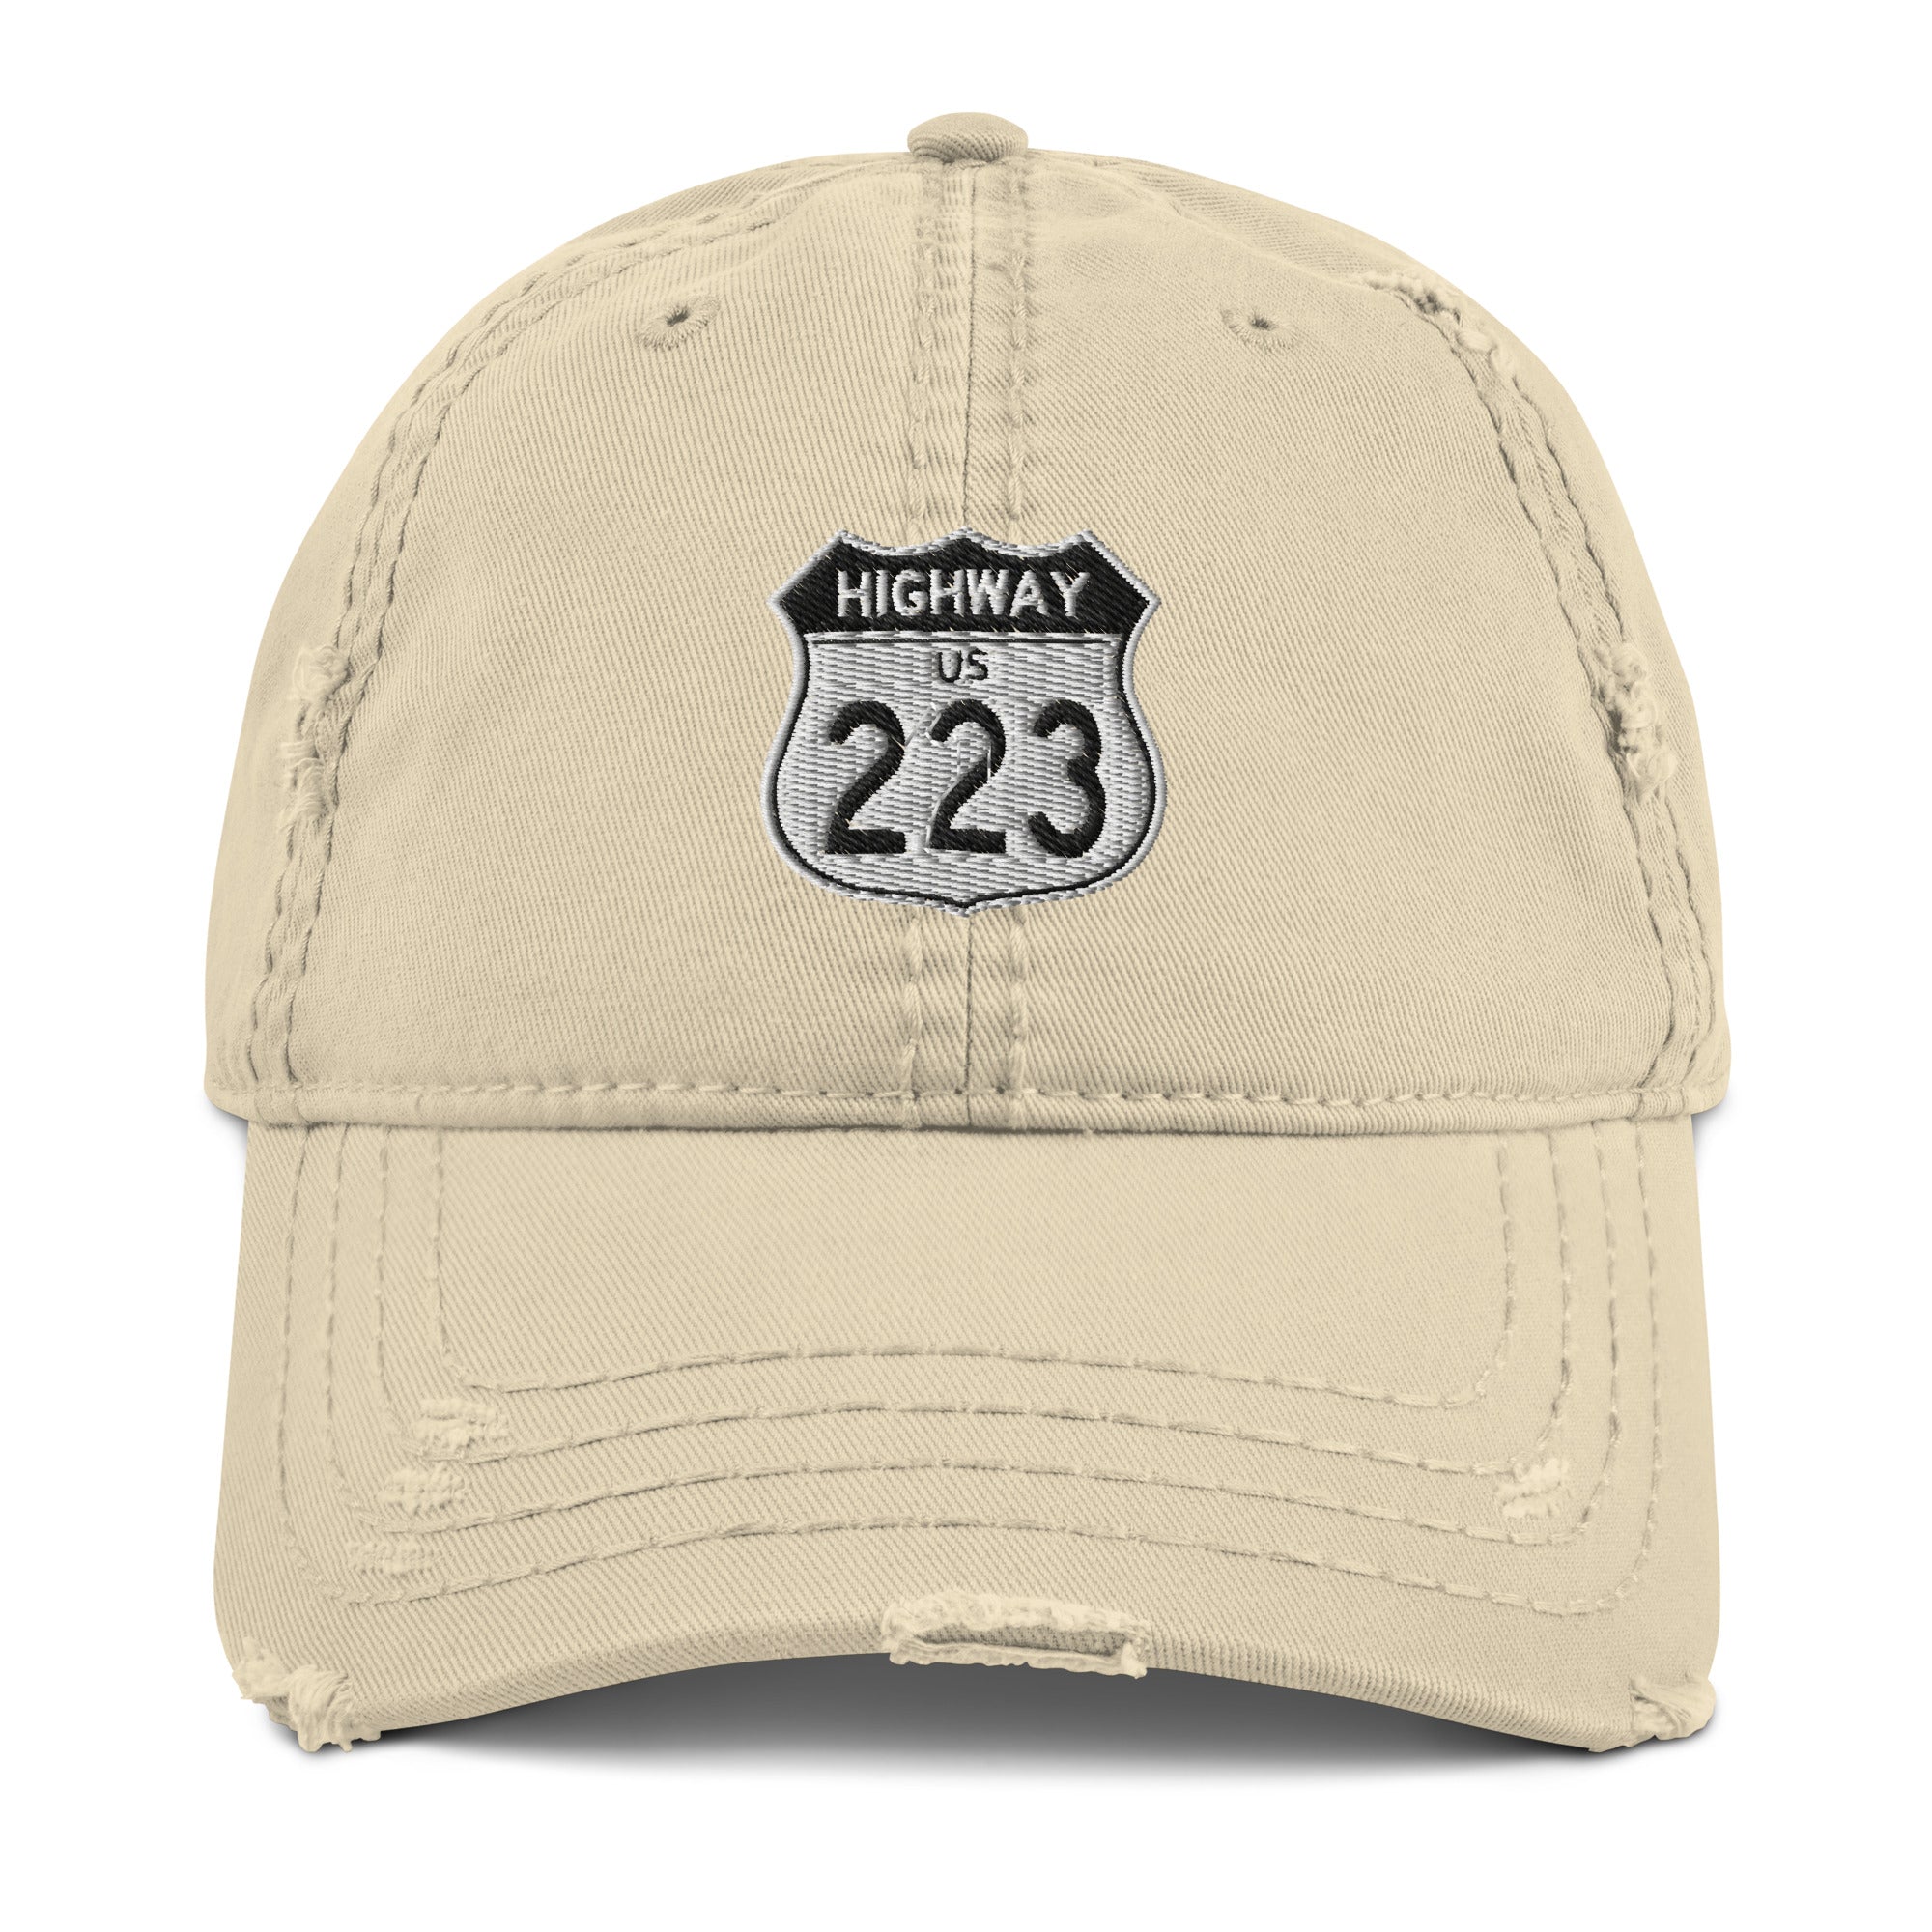 Highway 223 Distressed Dad Hat